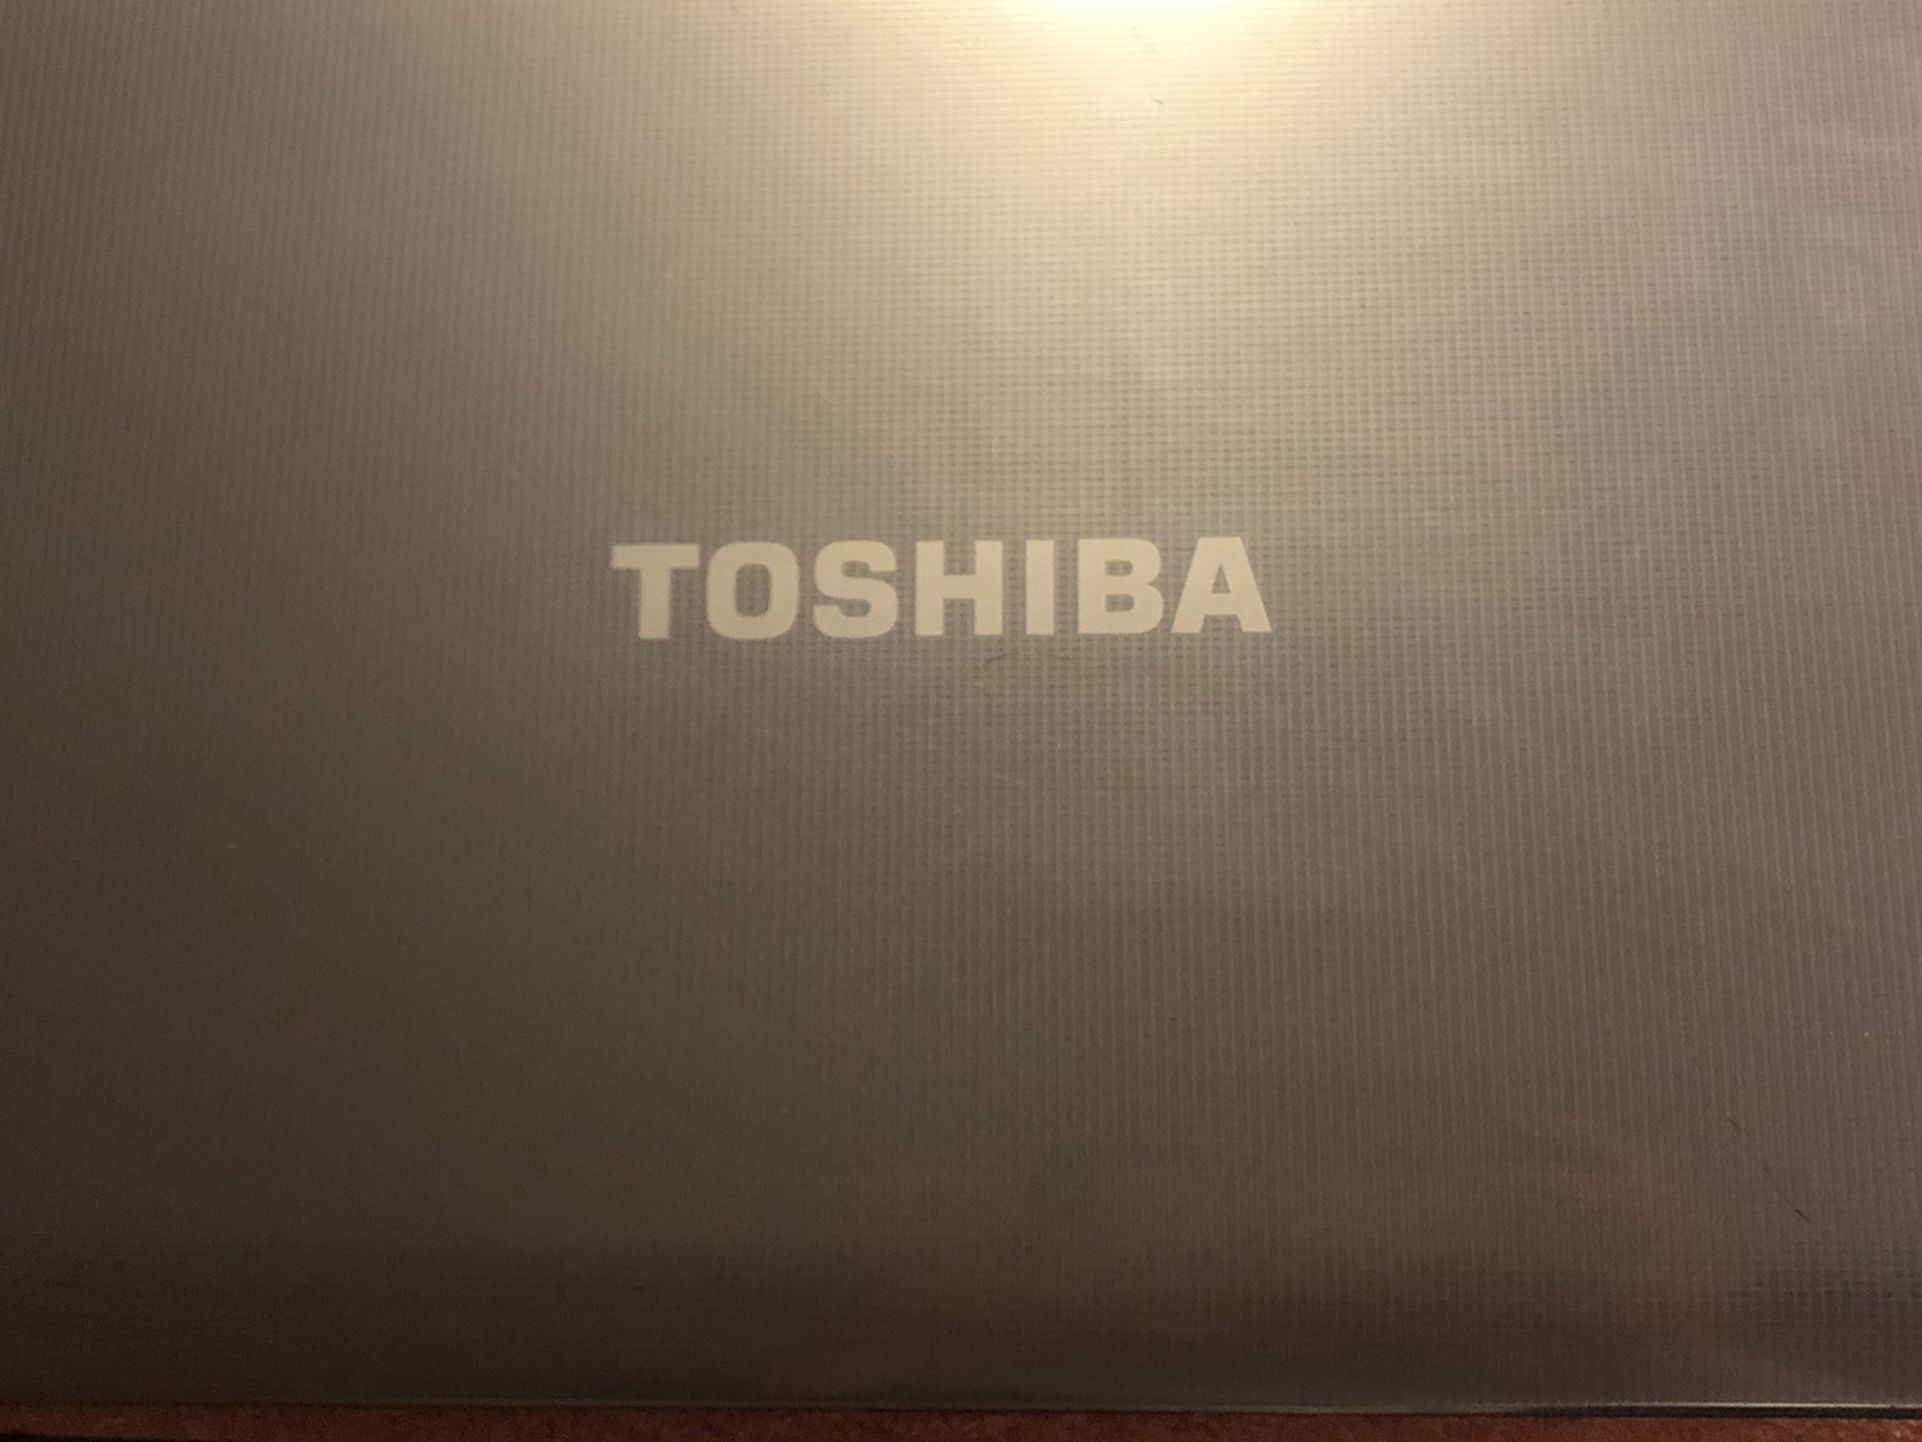 Toshiba Satellite Windows 8 Labtop